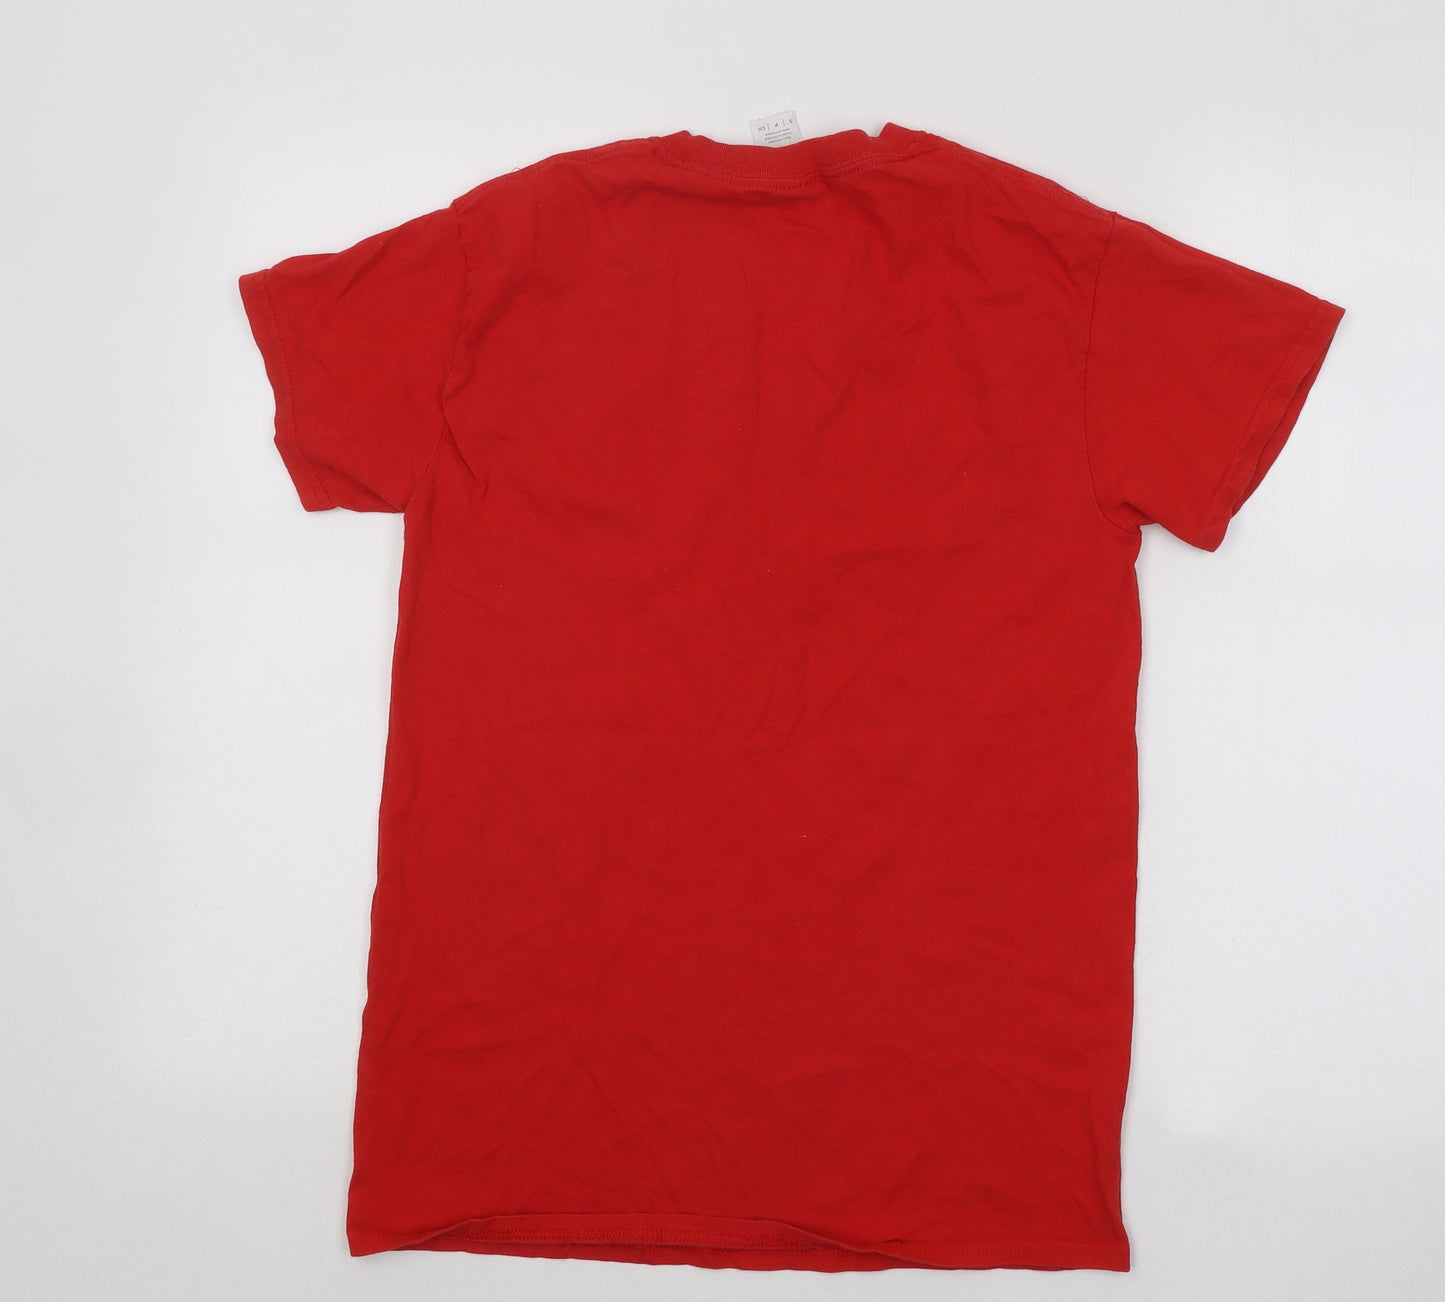 Gildan Mens Red Cotton T-Shirt Size S Round Neck - Wales Cymru